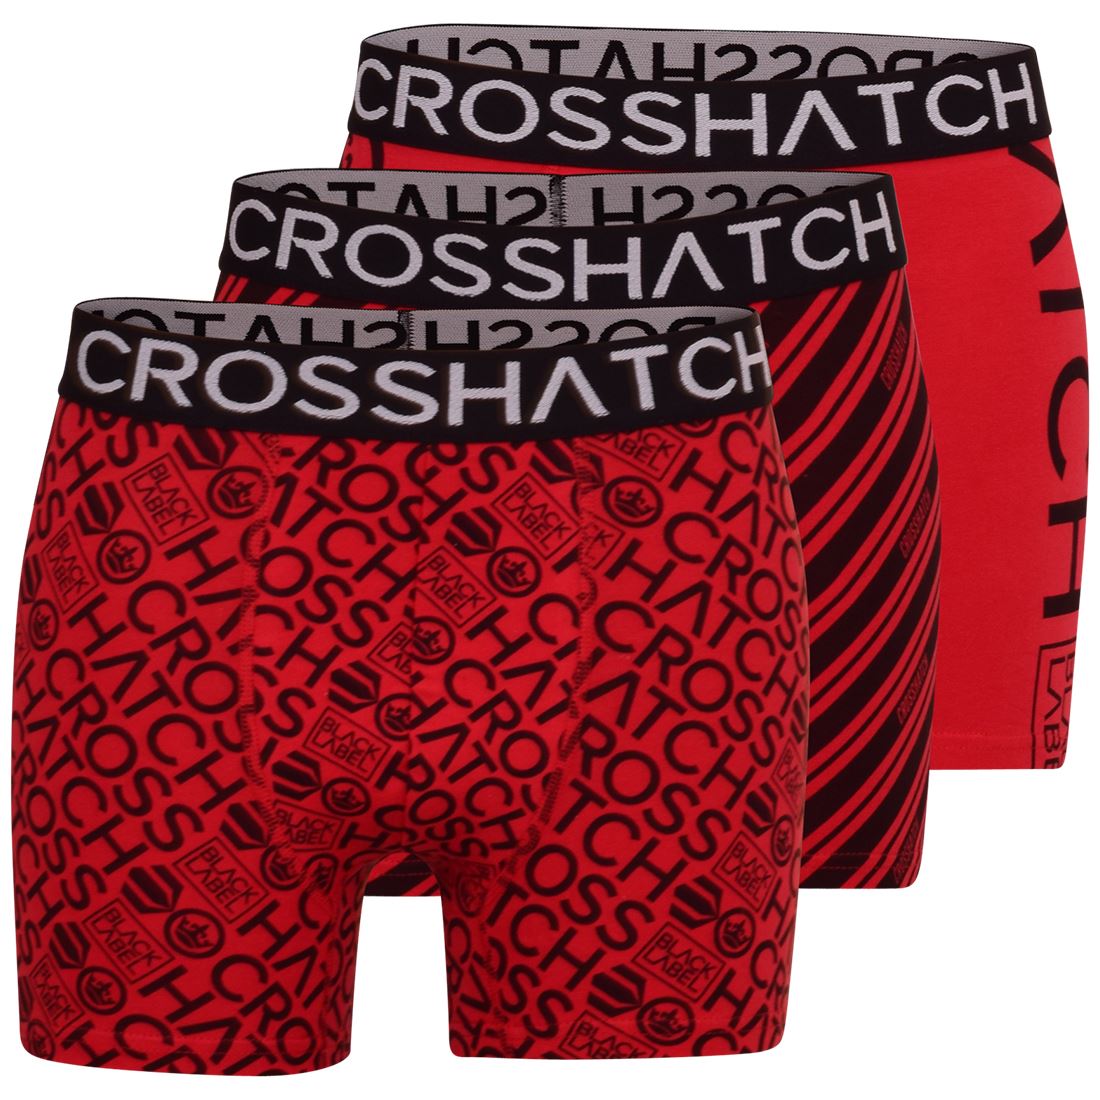 3 Pack Mens Crosshatch Designer Boxer Shorts Boxers Underwear Trunks Gift Box